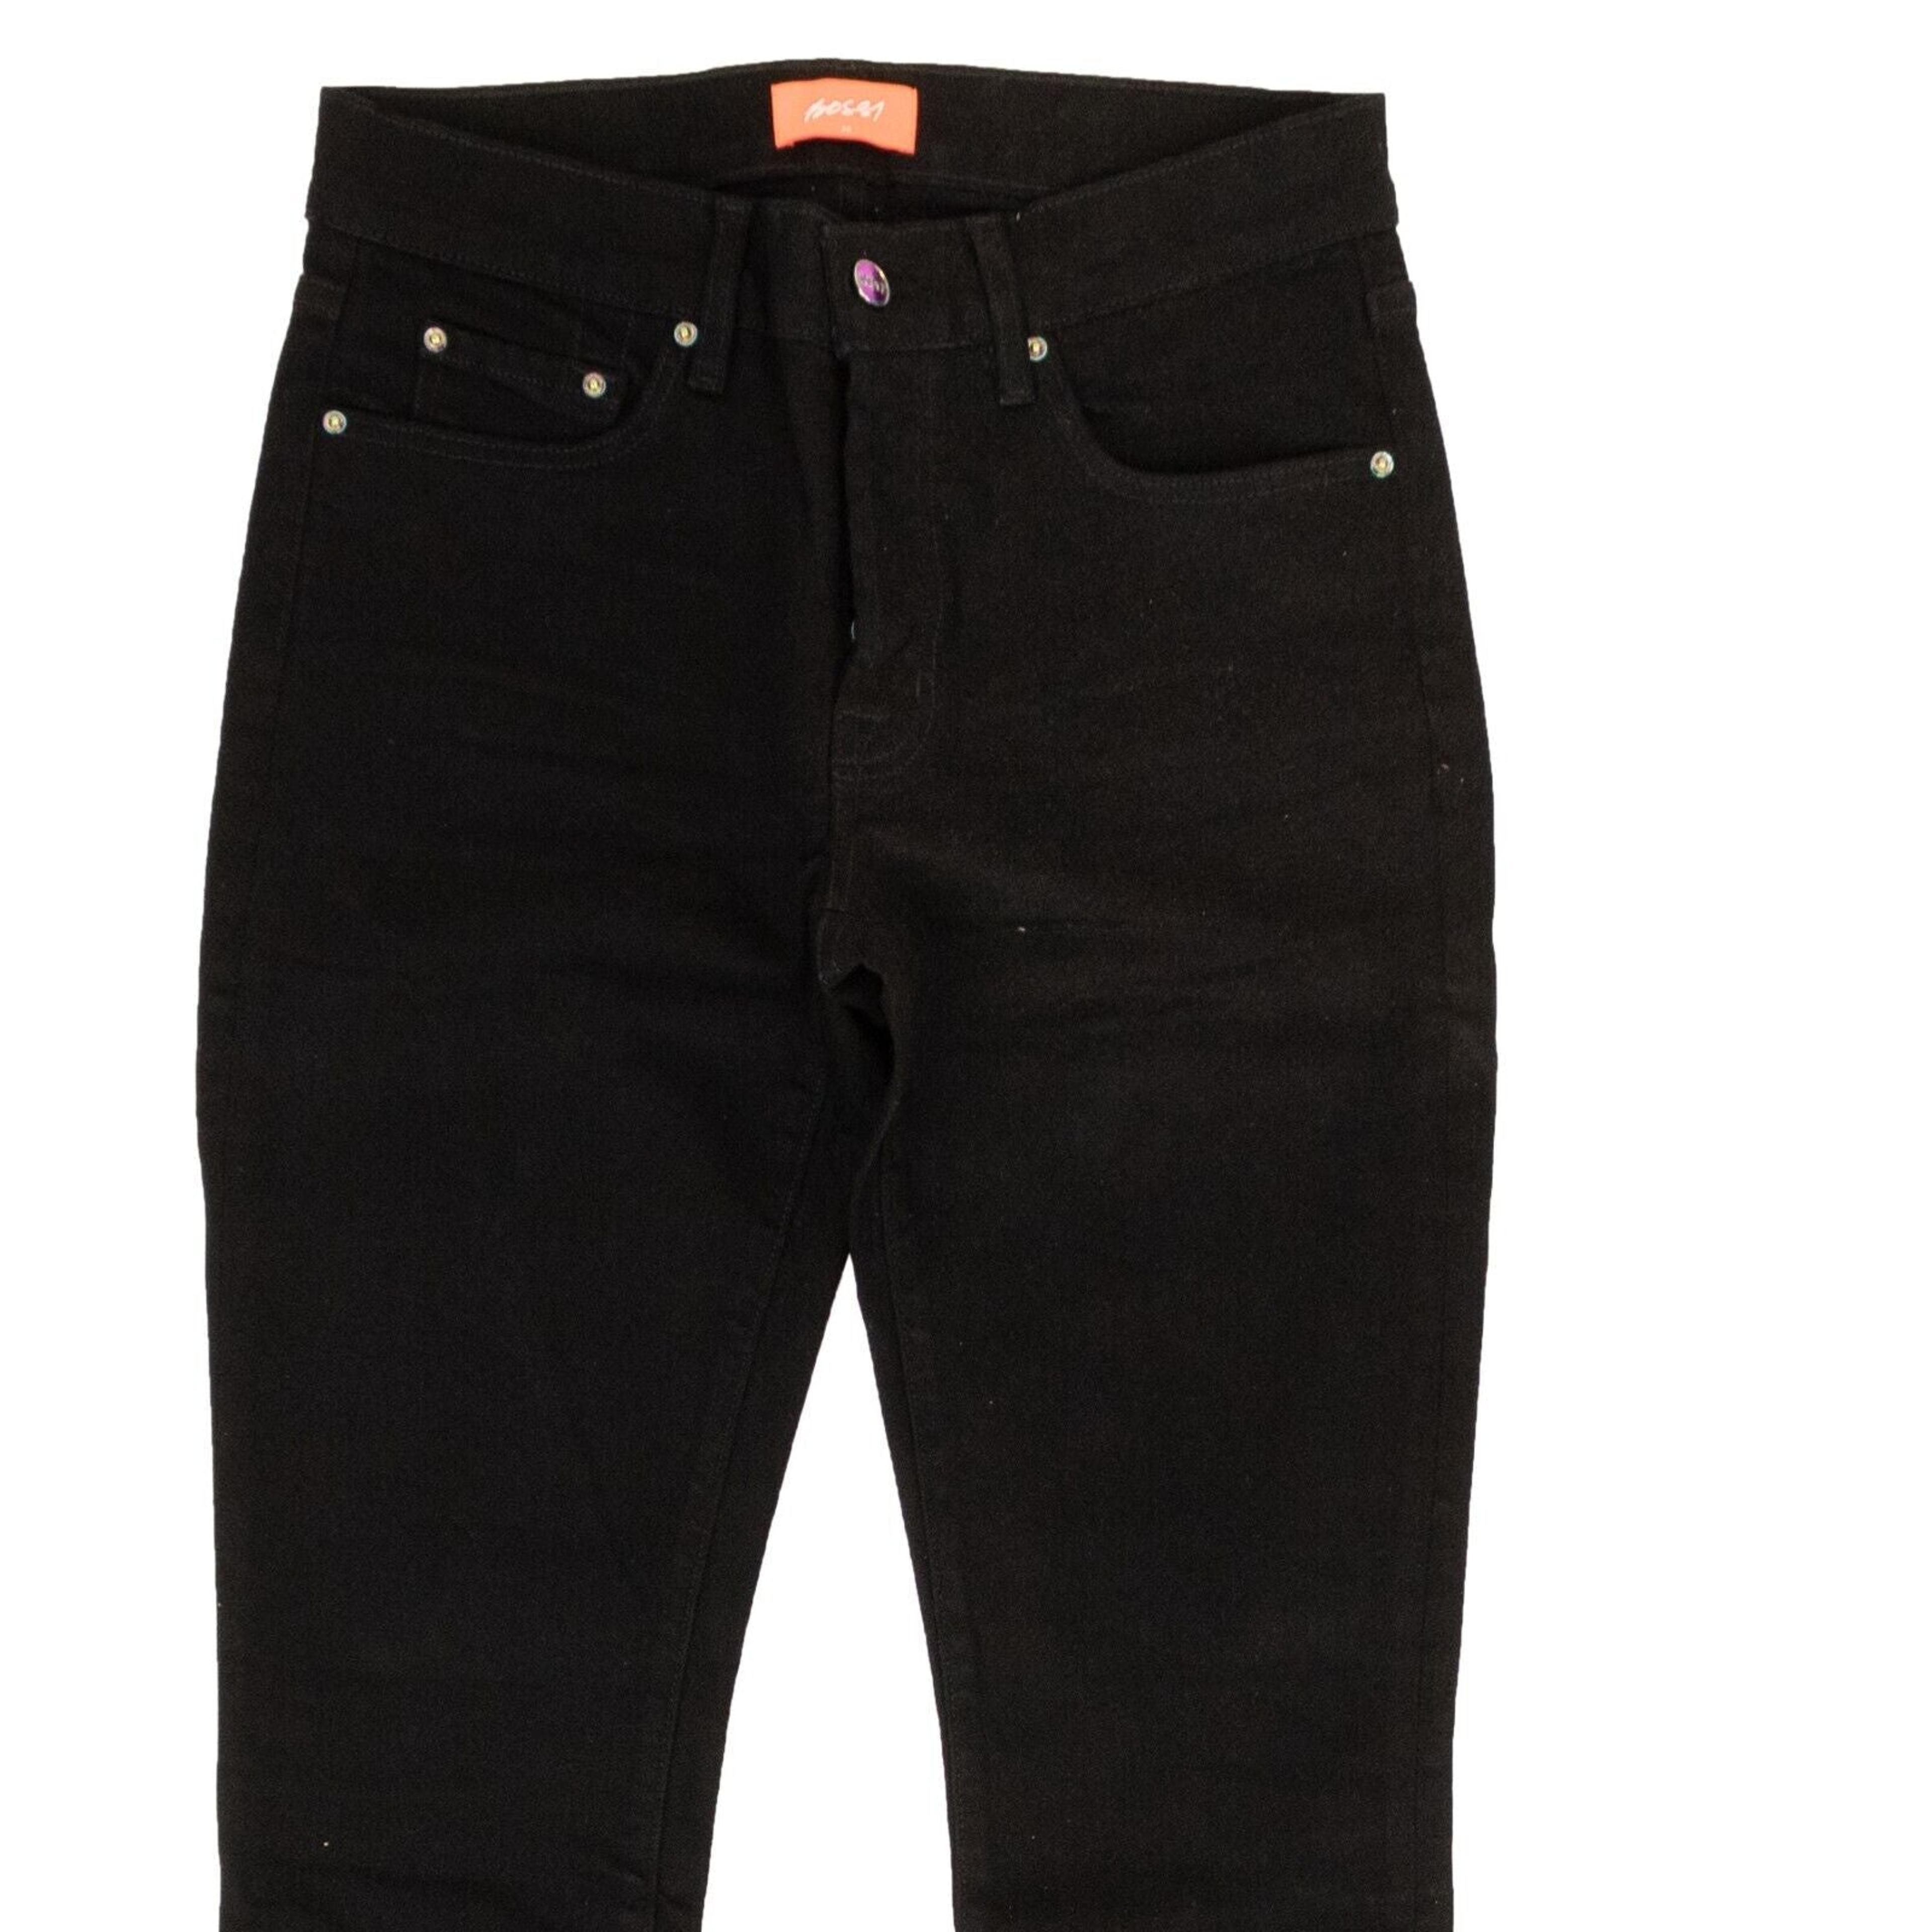 Alternate View 1 of Black Wash Cotton 3D Slim-Fit Jeans